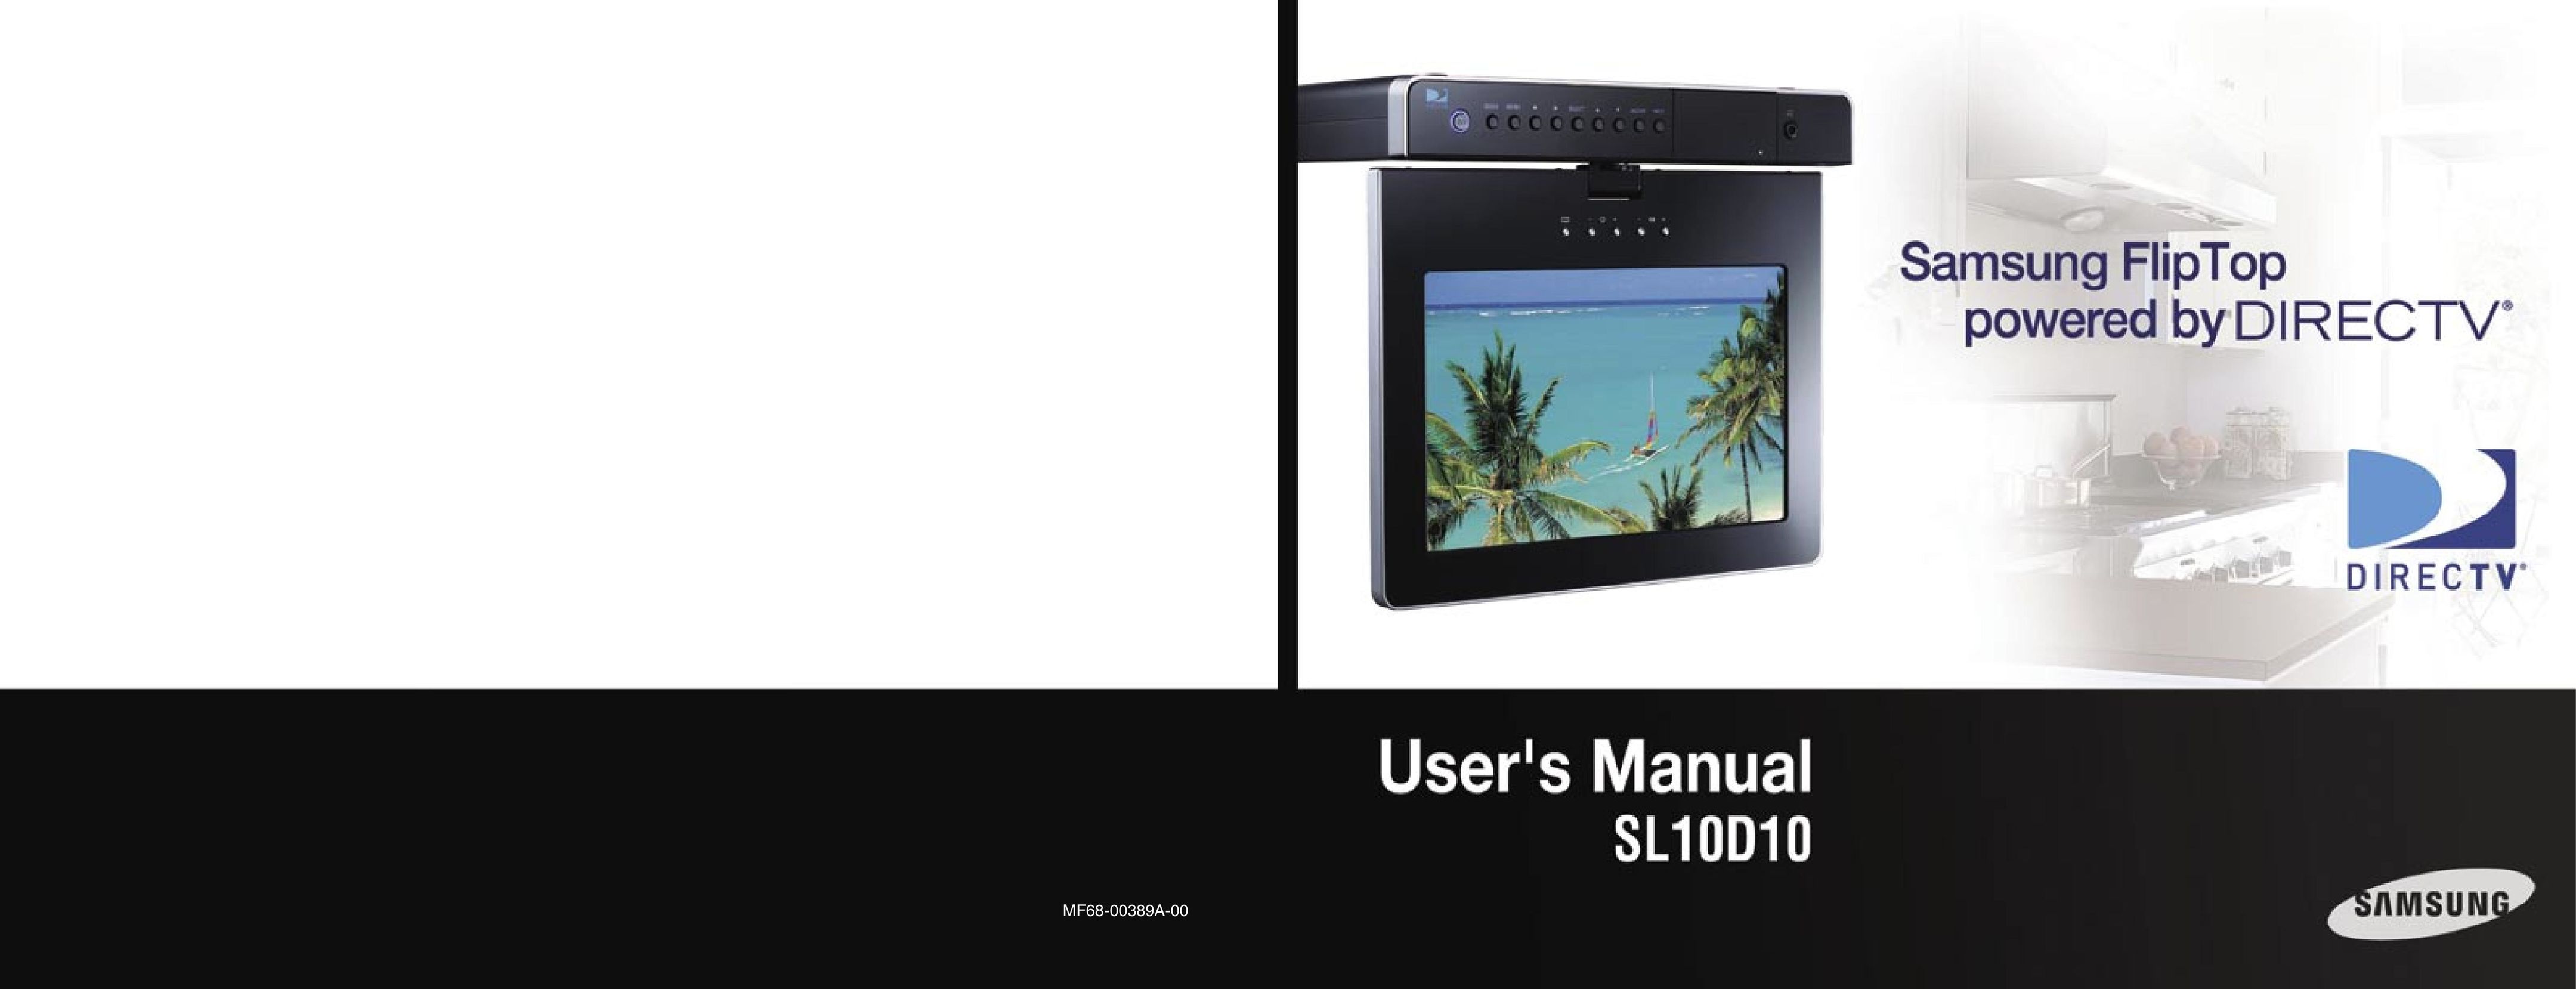 Samsung SL10D10 Satellite TV System User Manual